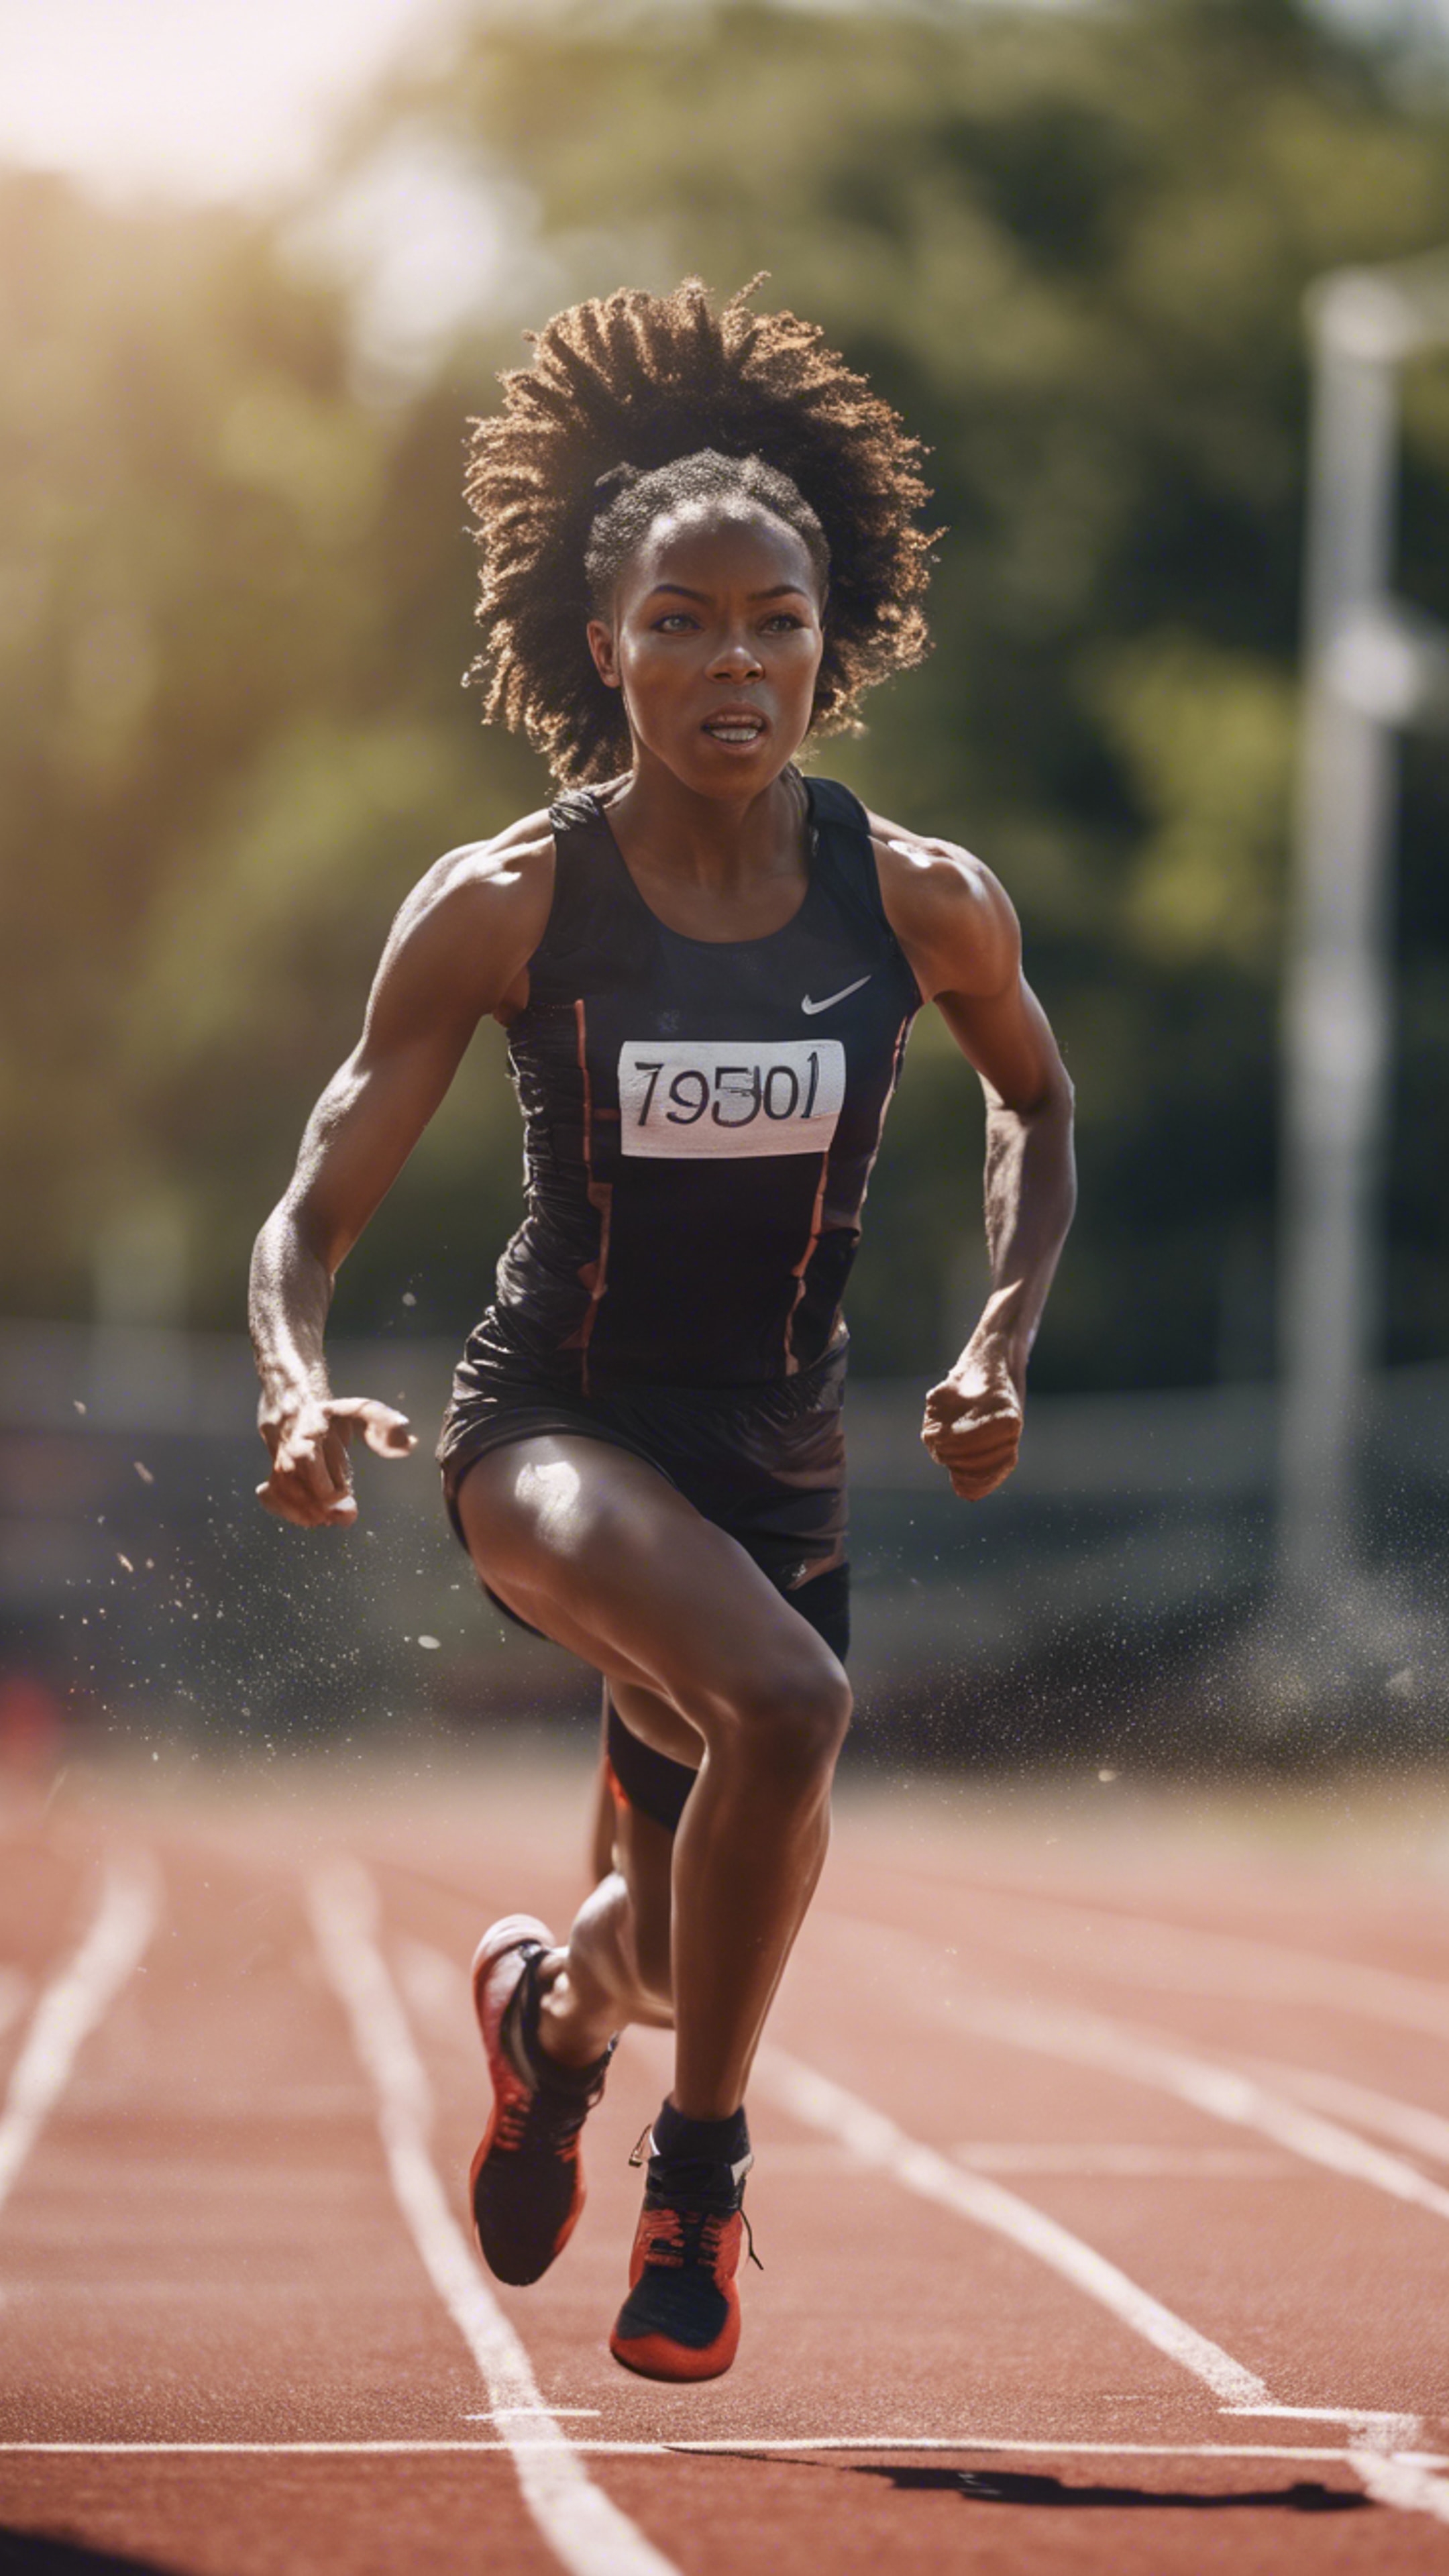 A dynamic image of a black girl engaging in competitive sprint, showing her vital energy. Divar kağızı[76eb5b44f4a84b498fc2]